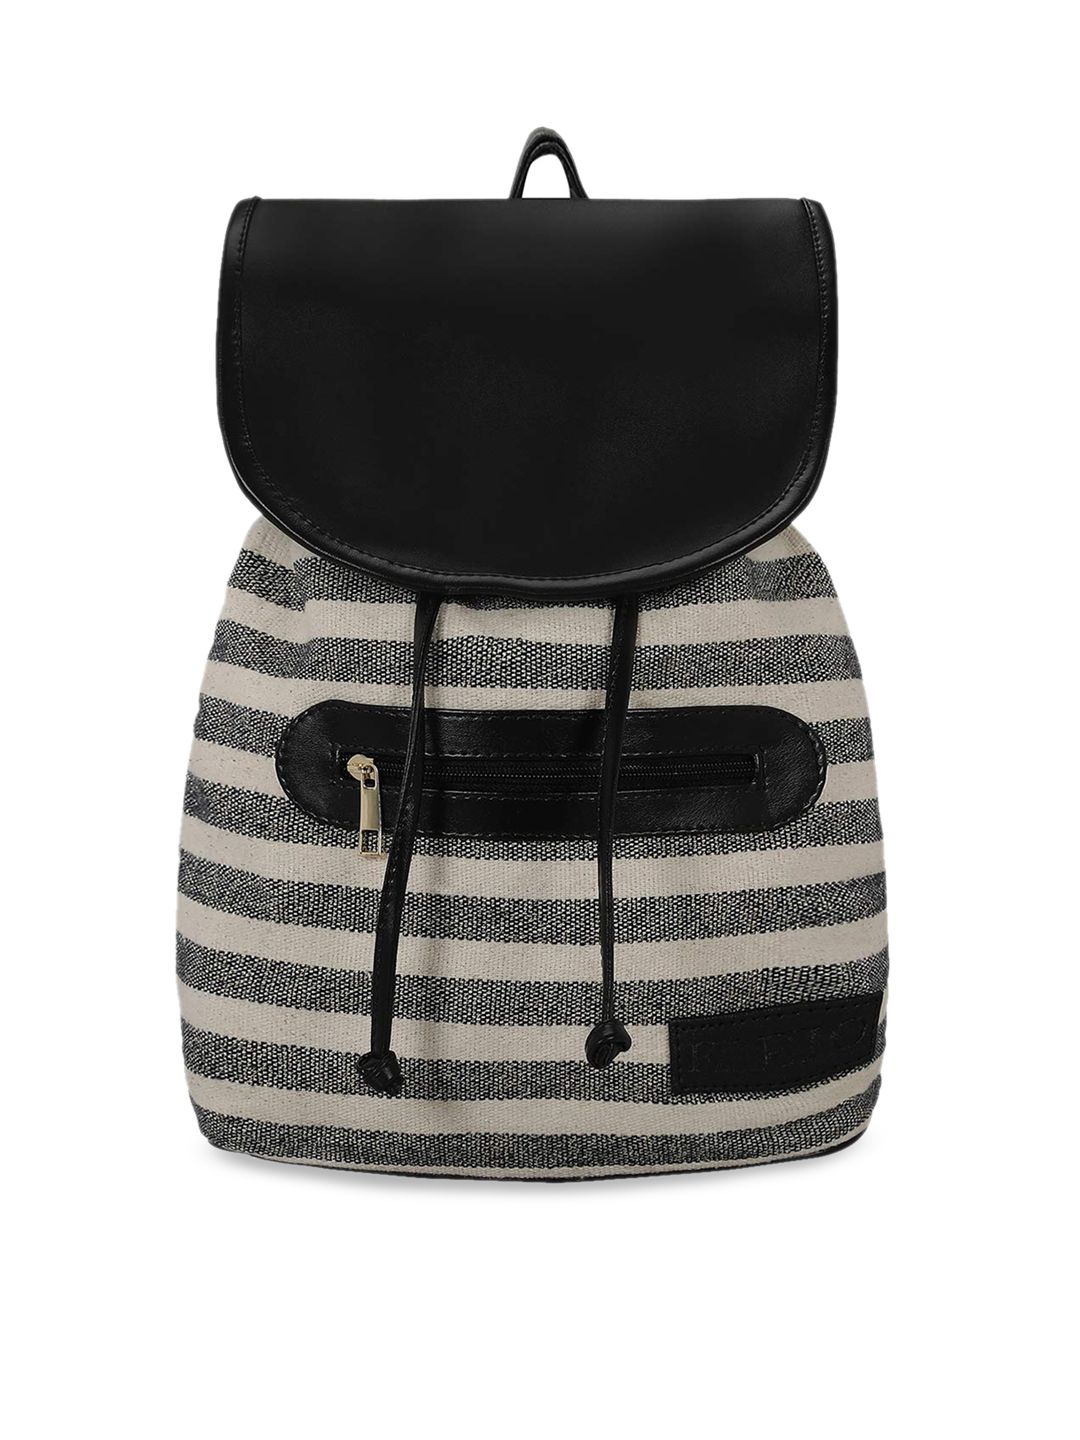 KLEIO Women Black & Grey Striped Backpack Price in India